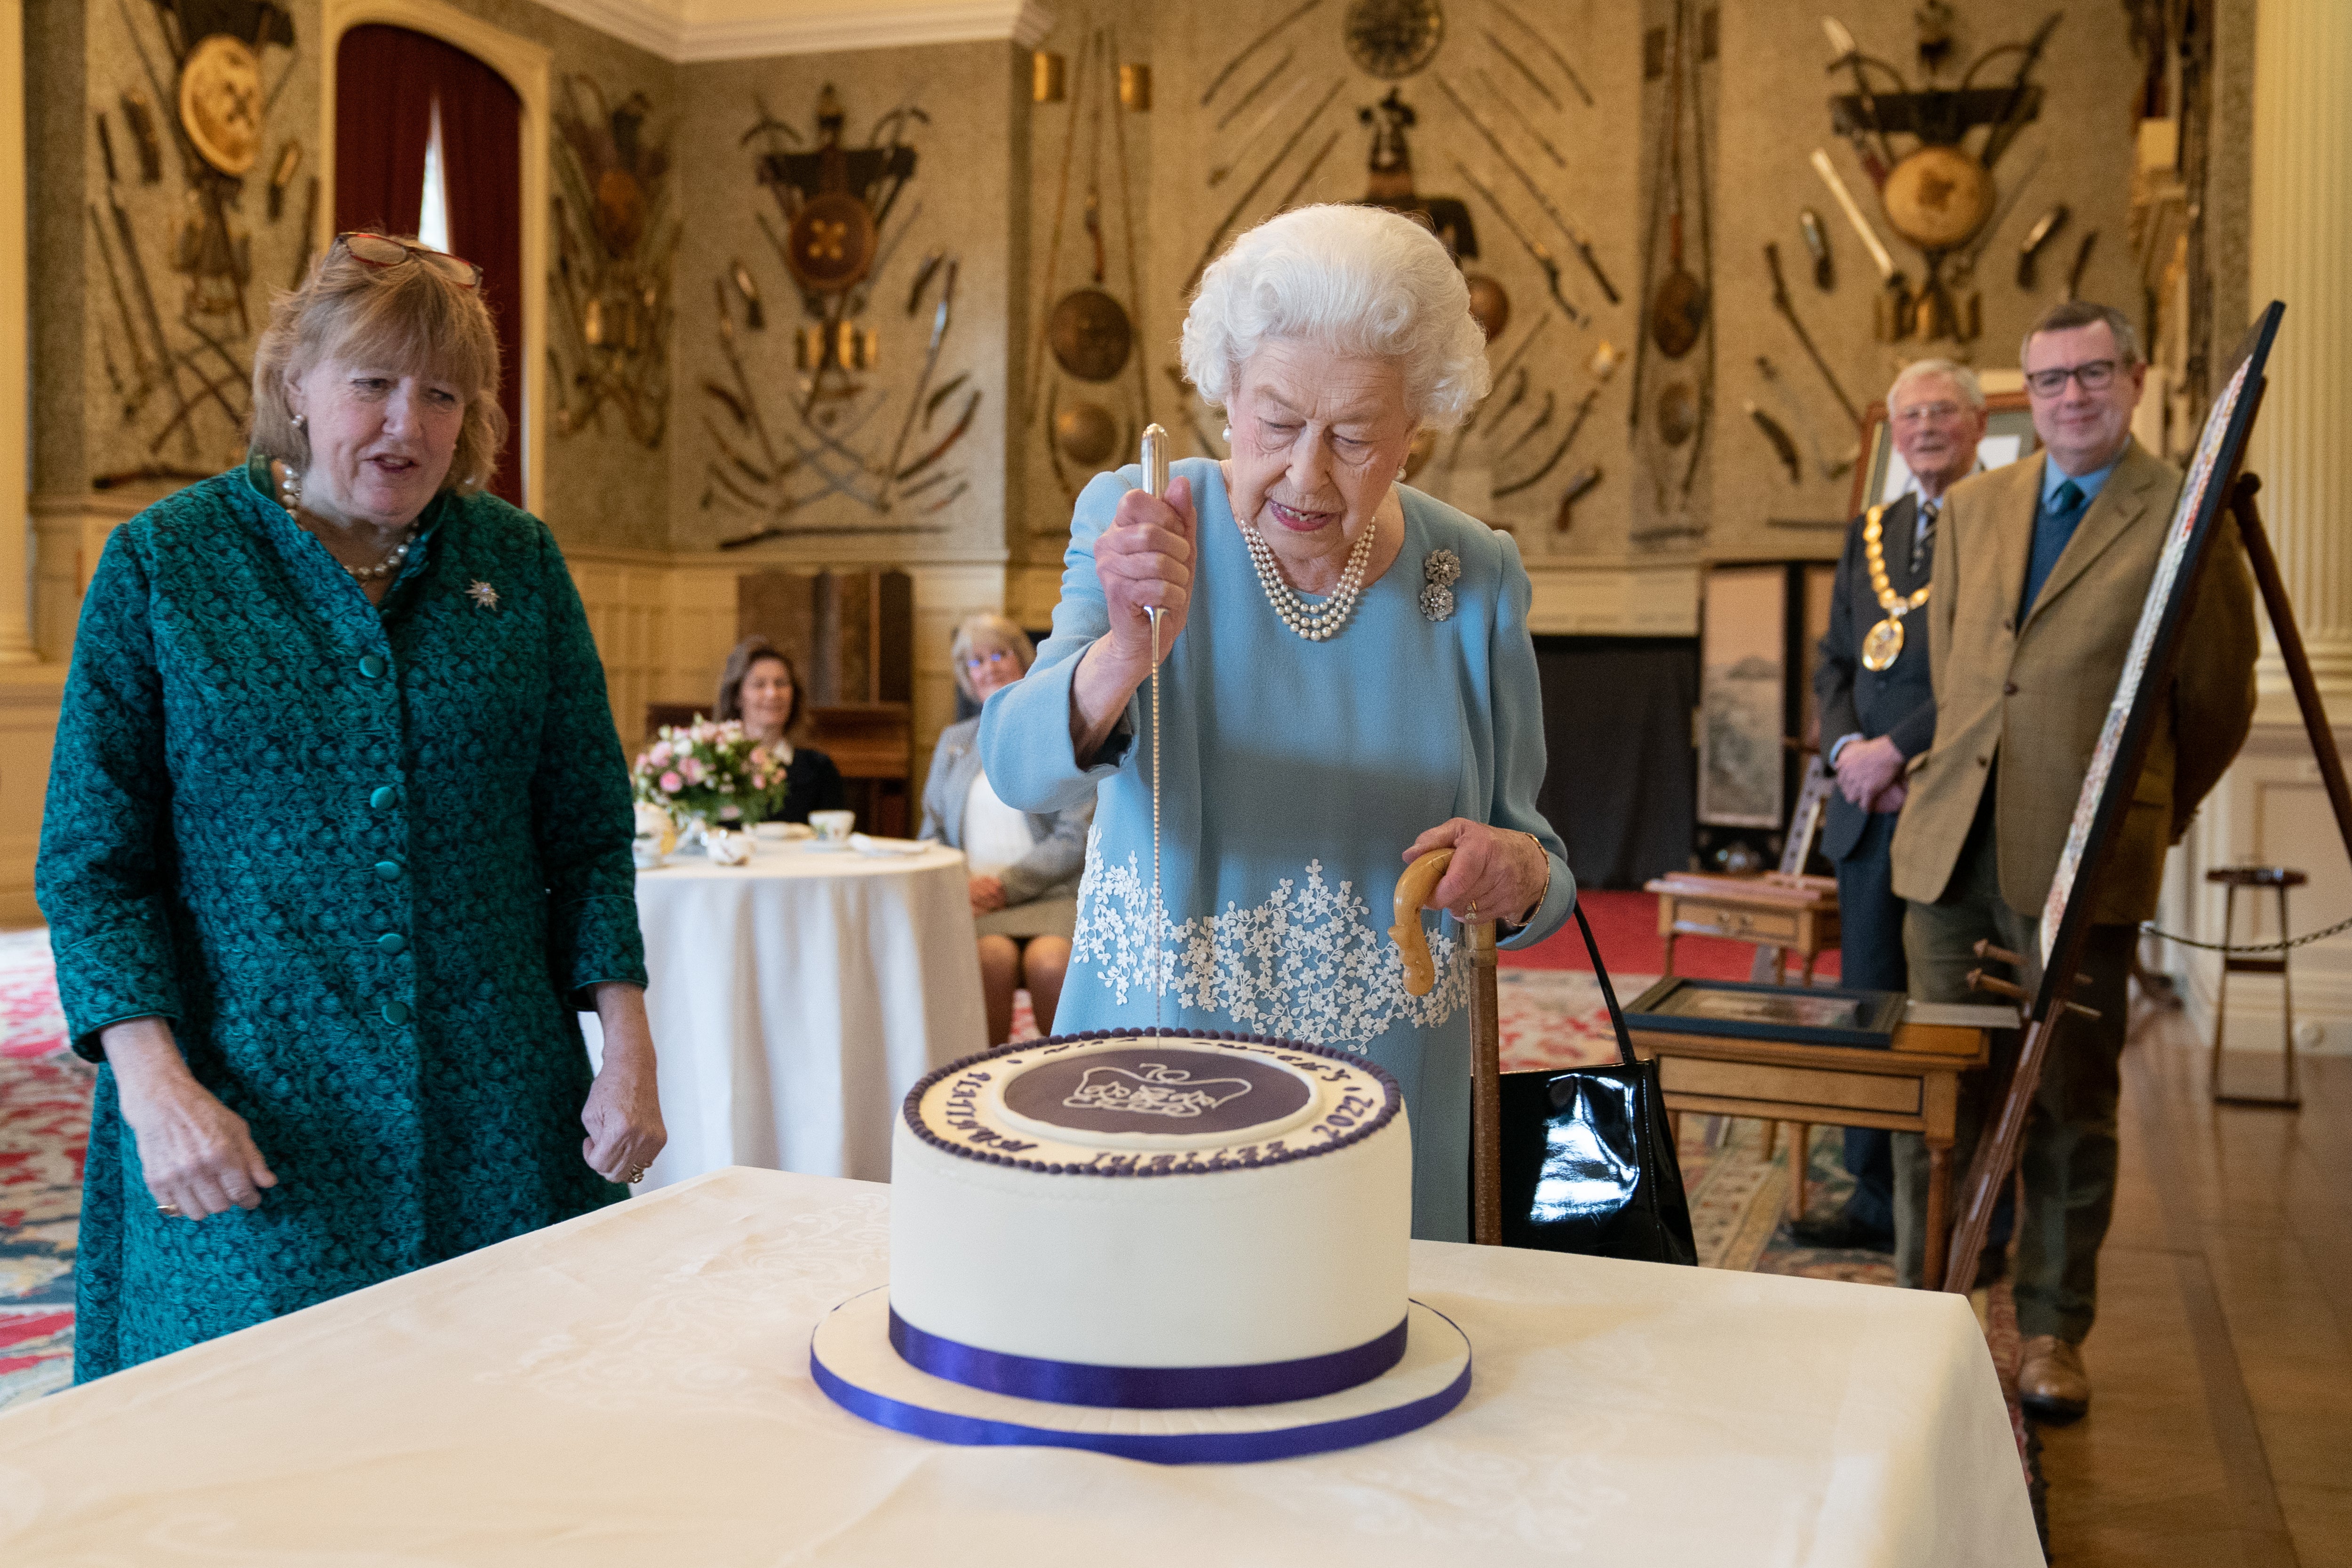 The Queen cutting her Jubilee cake (Joe Giddens/PA)